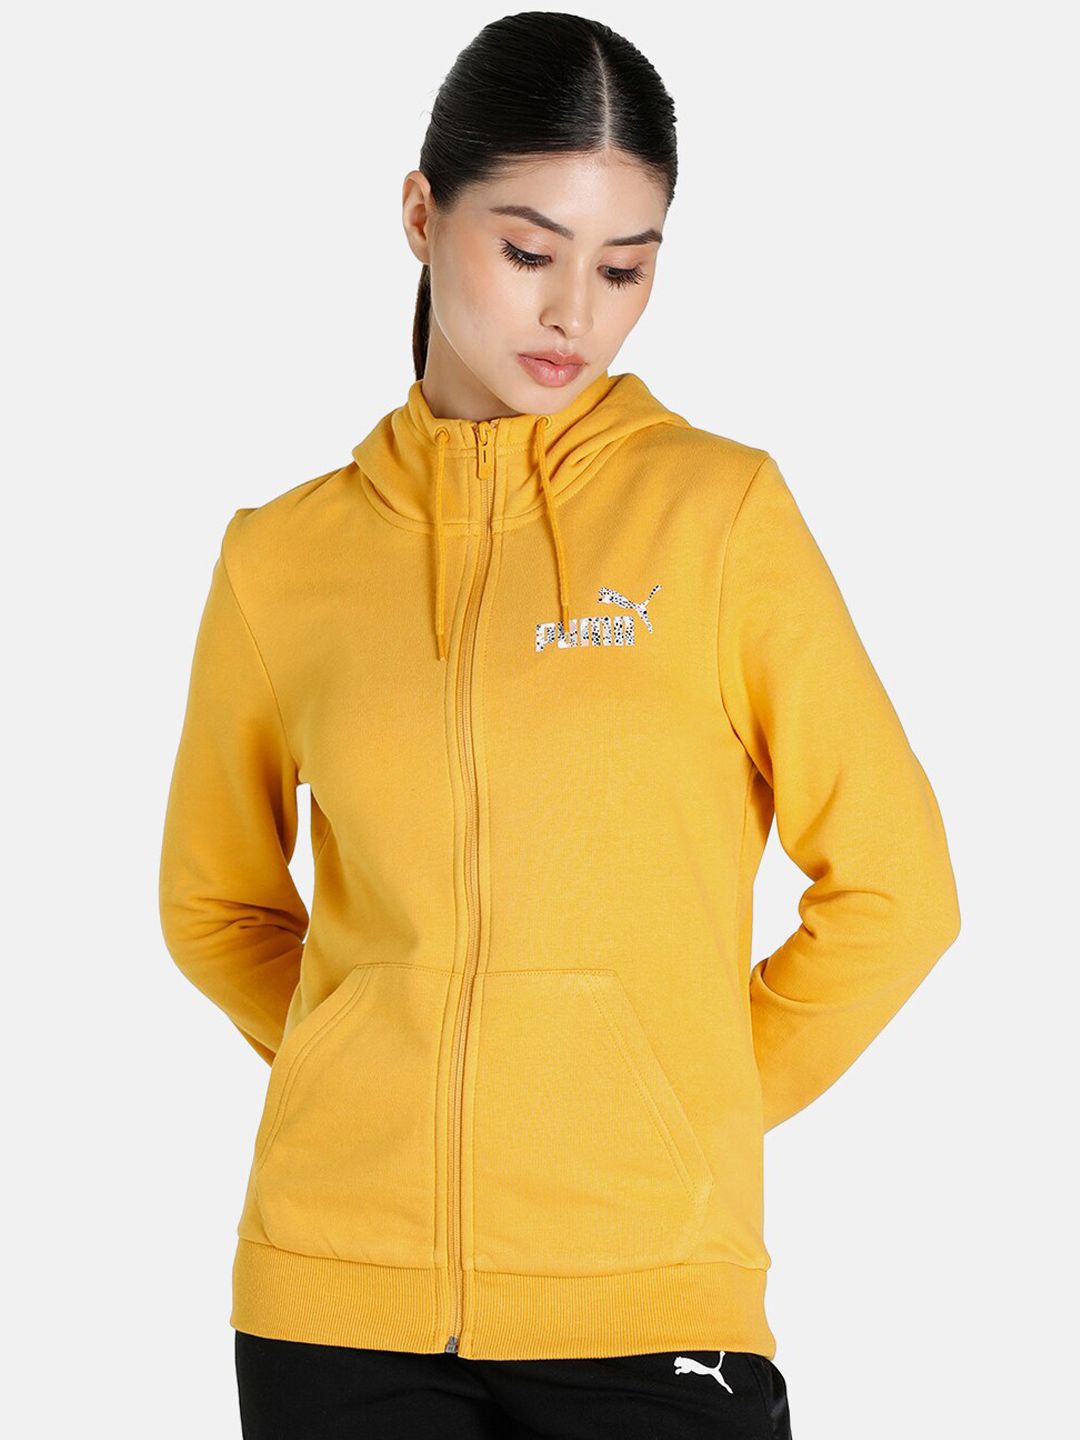 Puma Women Yellow Sporty Jacket Price in India